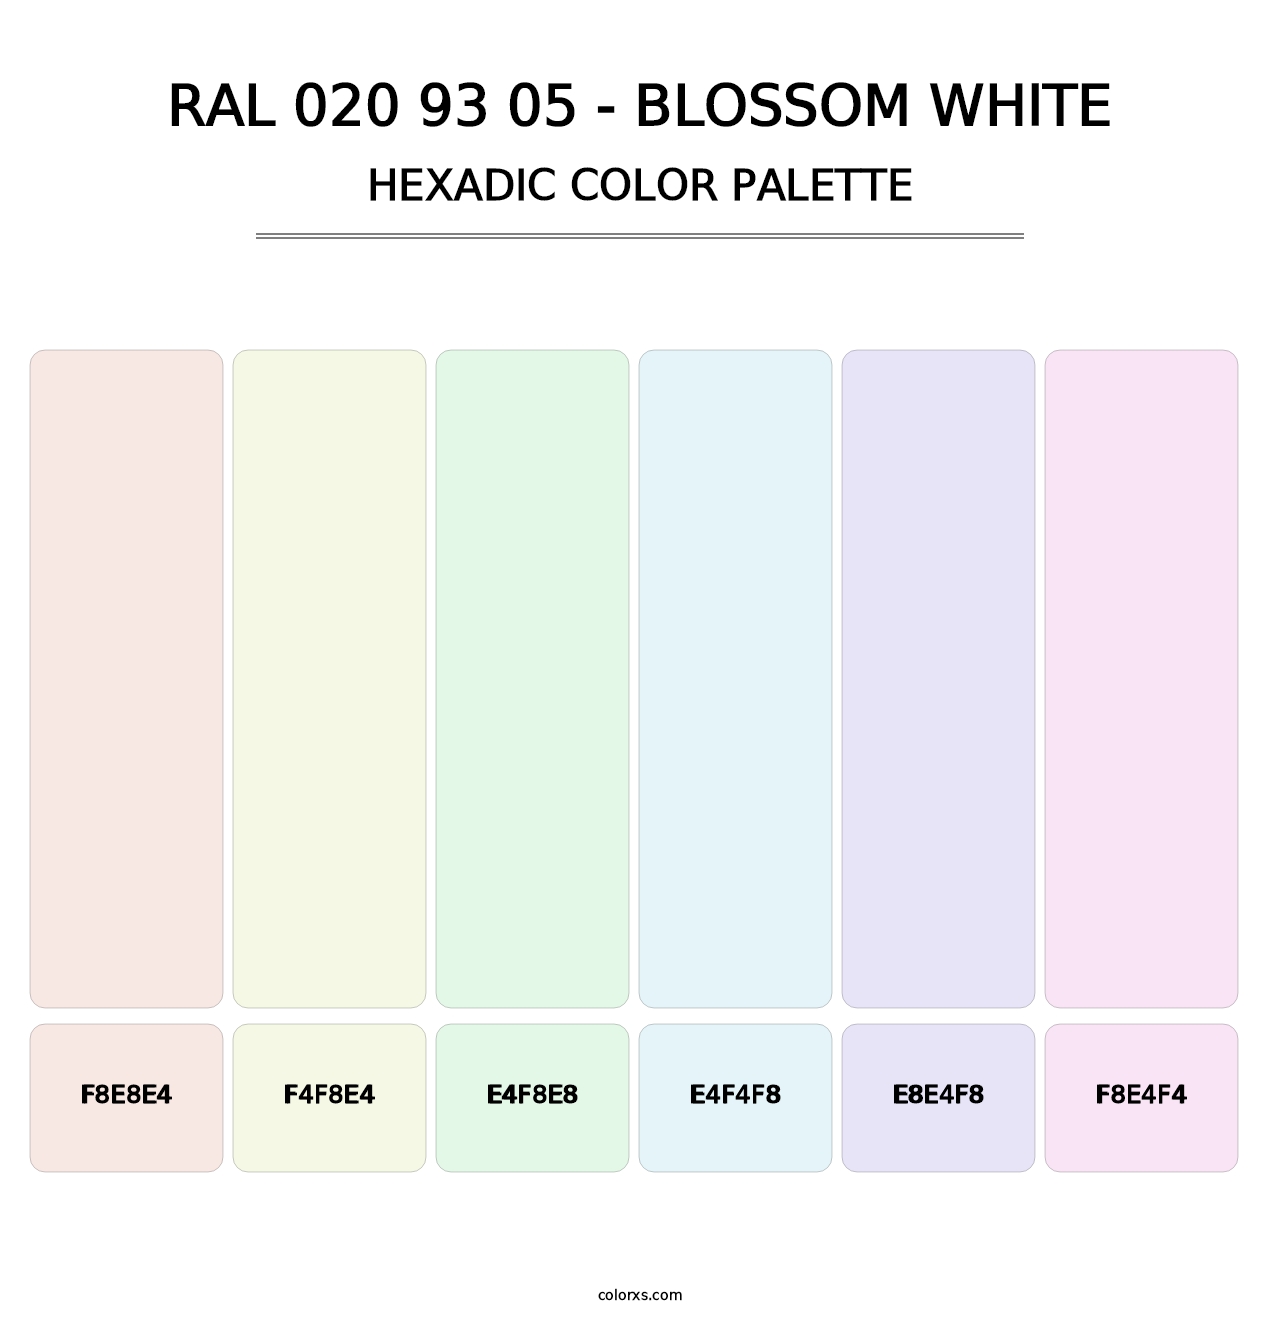 RAL 020 93 05 - Blossom White - Hexadic Color Palette